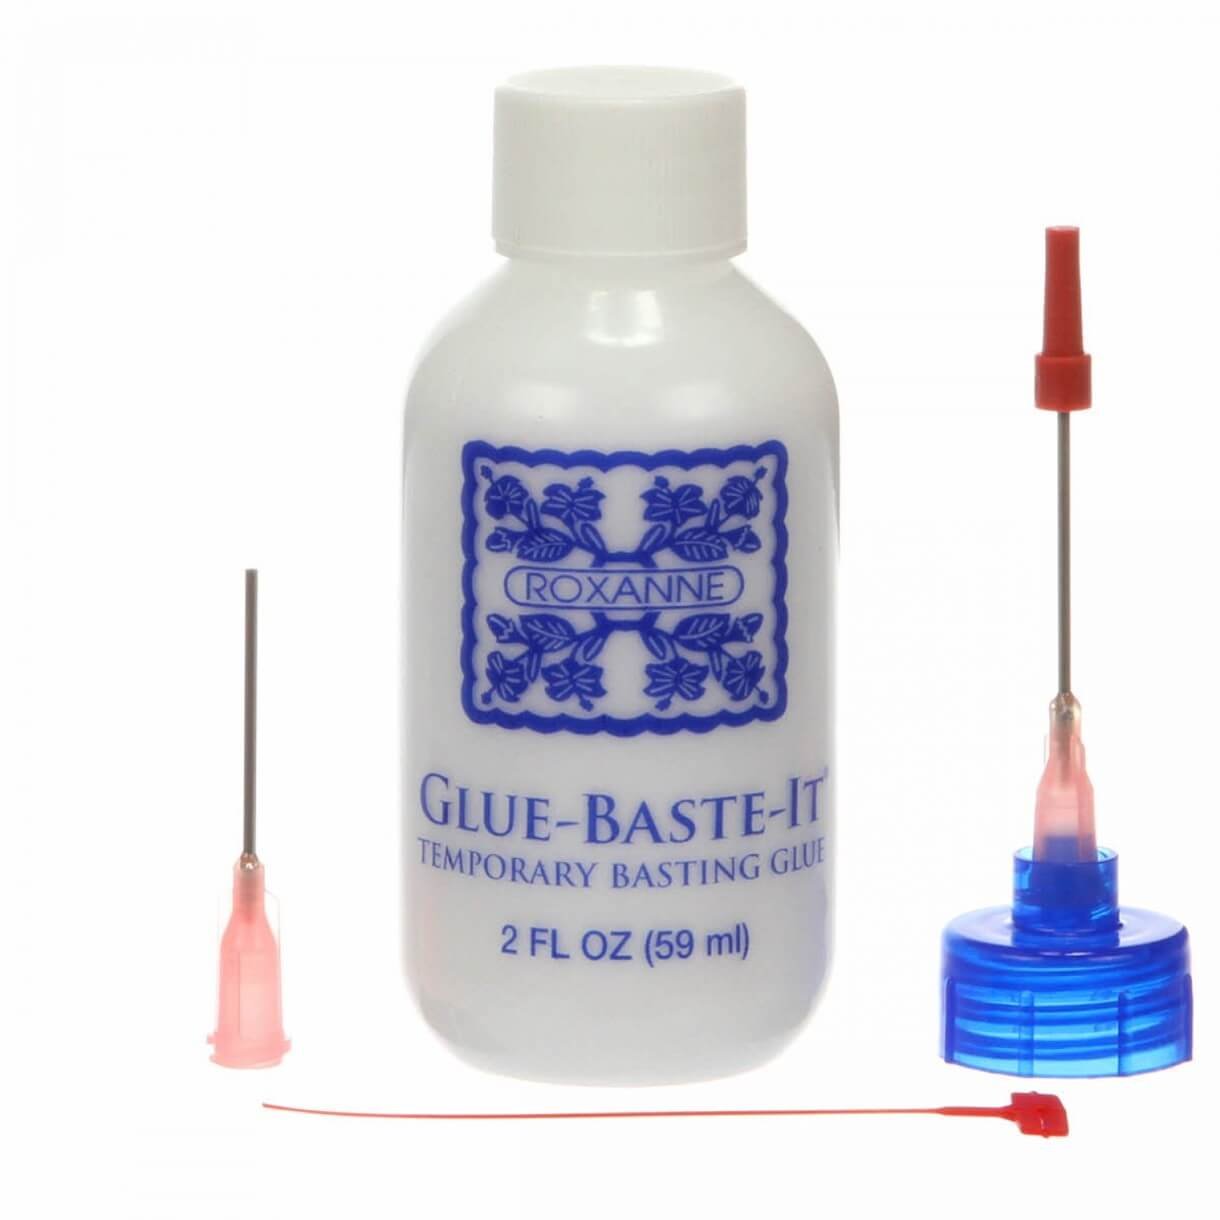 Roxannes glue-baste-it